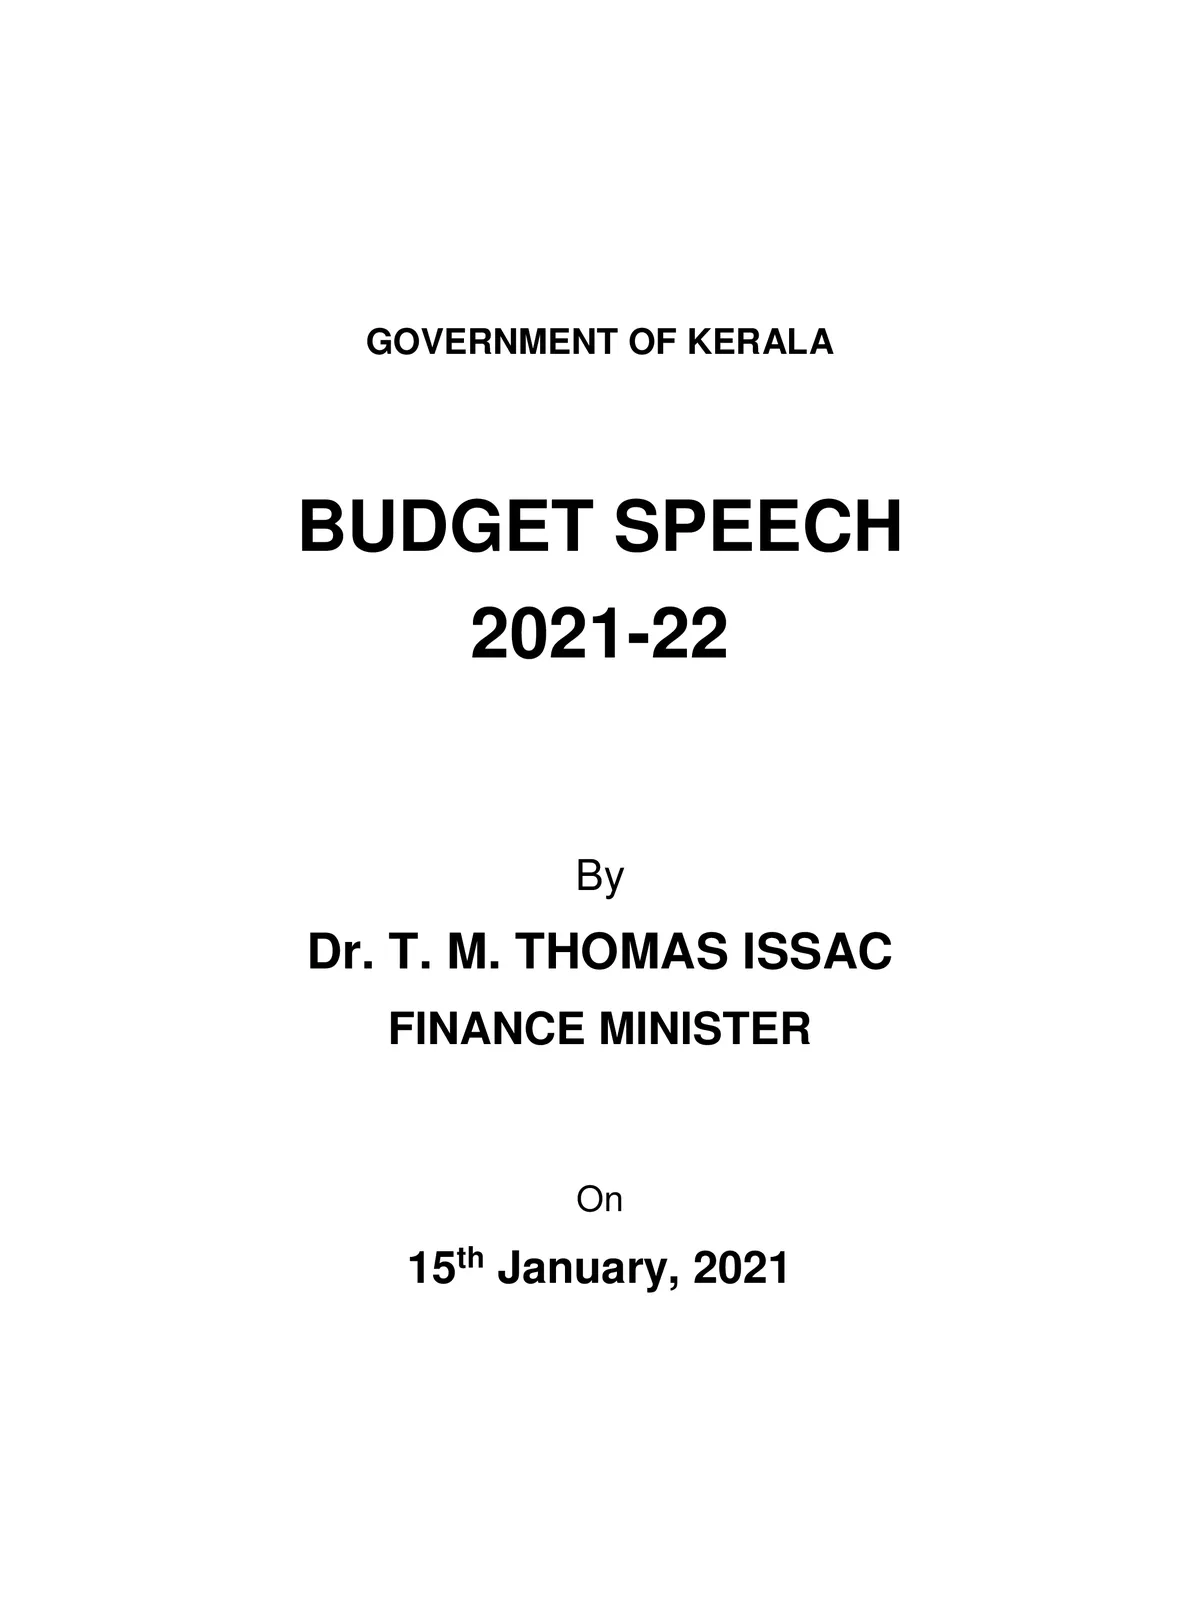 Kerala Budget 2021-2022